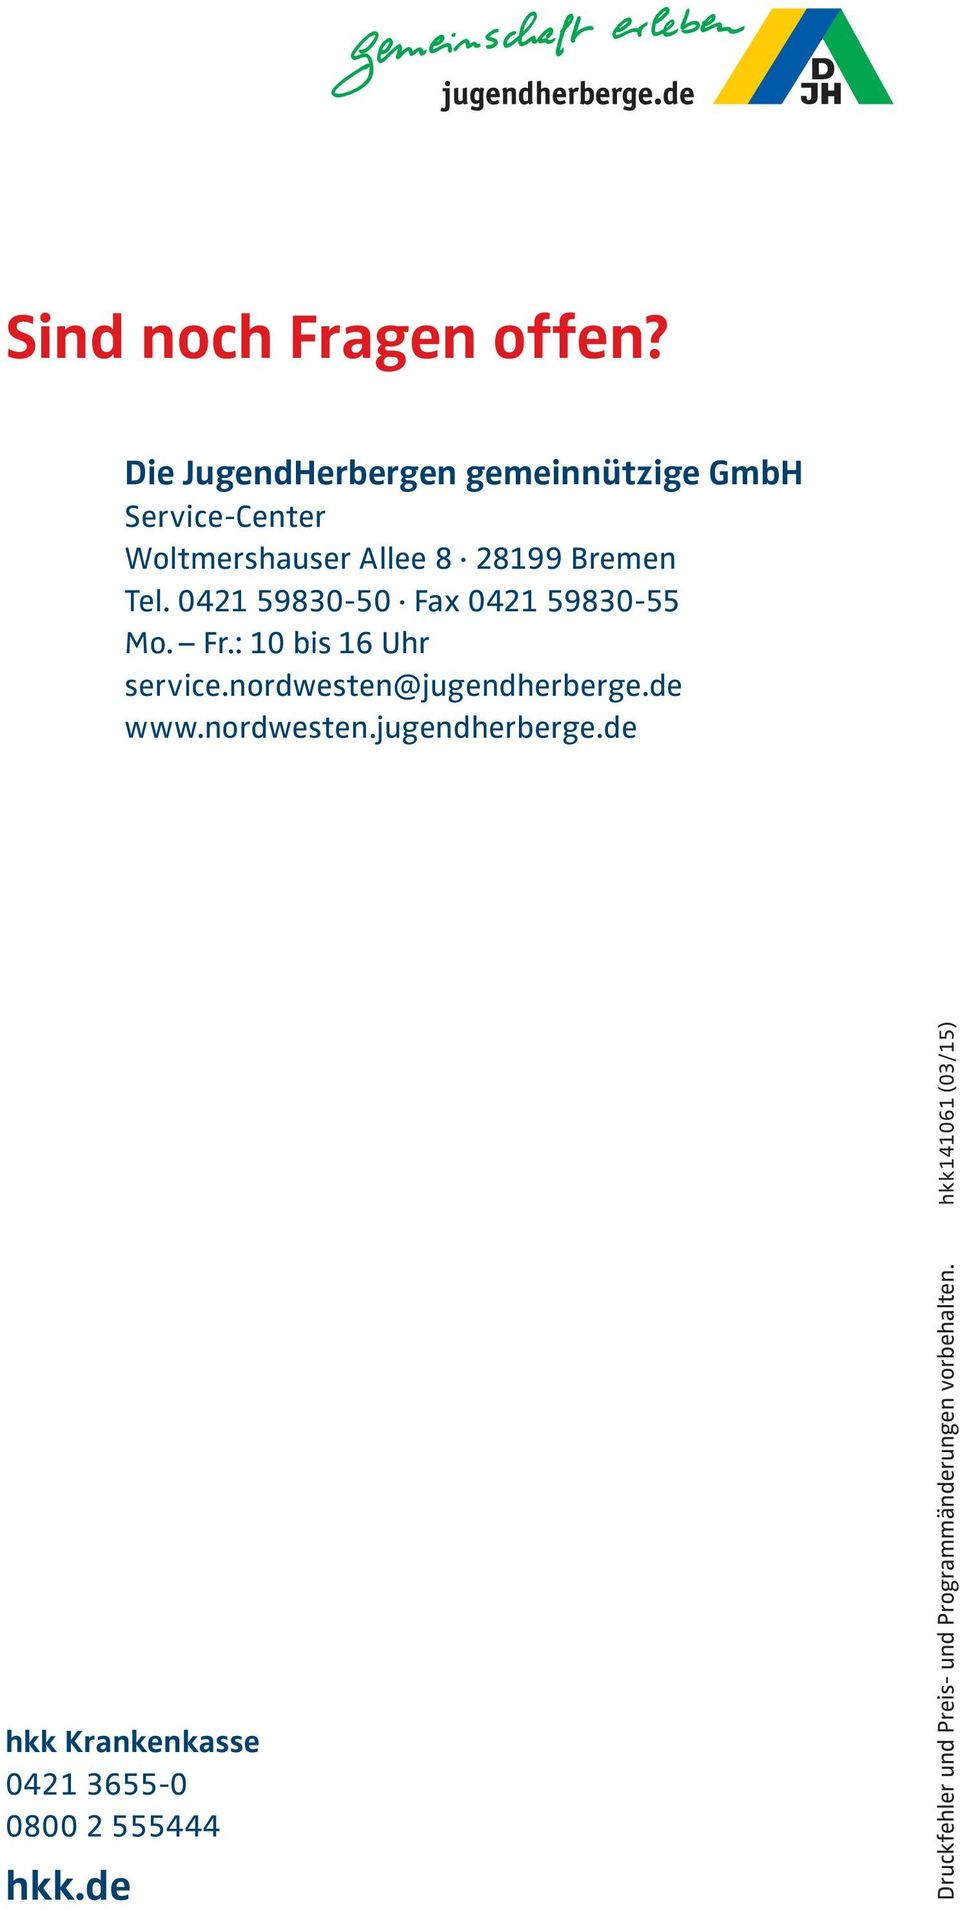 Tel. 0421 59830-50 Fax 0421 59830-55 Mo. Fr.: 10 bis 16 Uhr service.